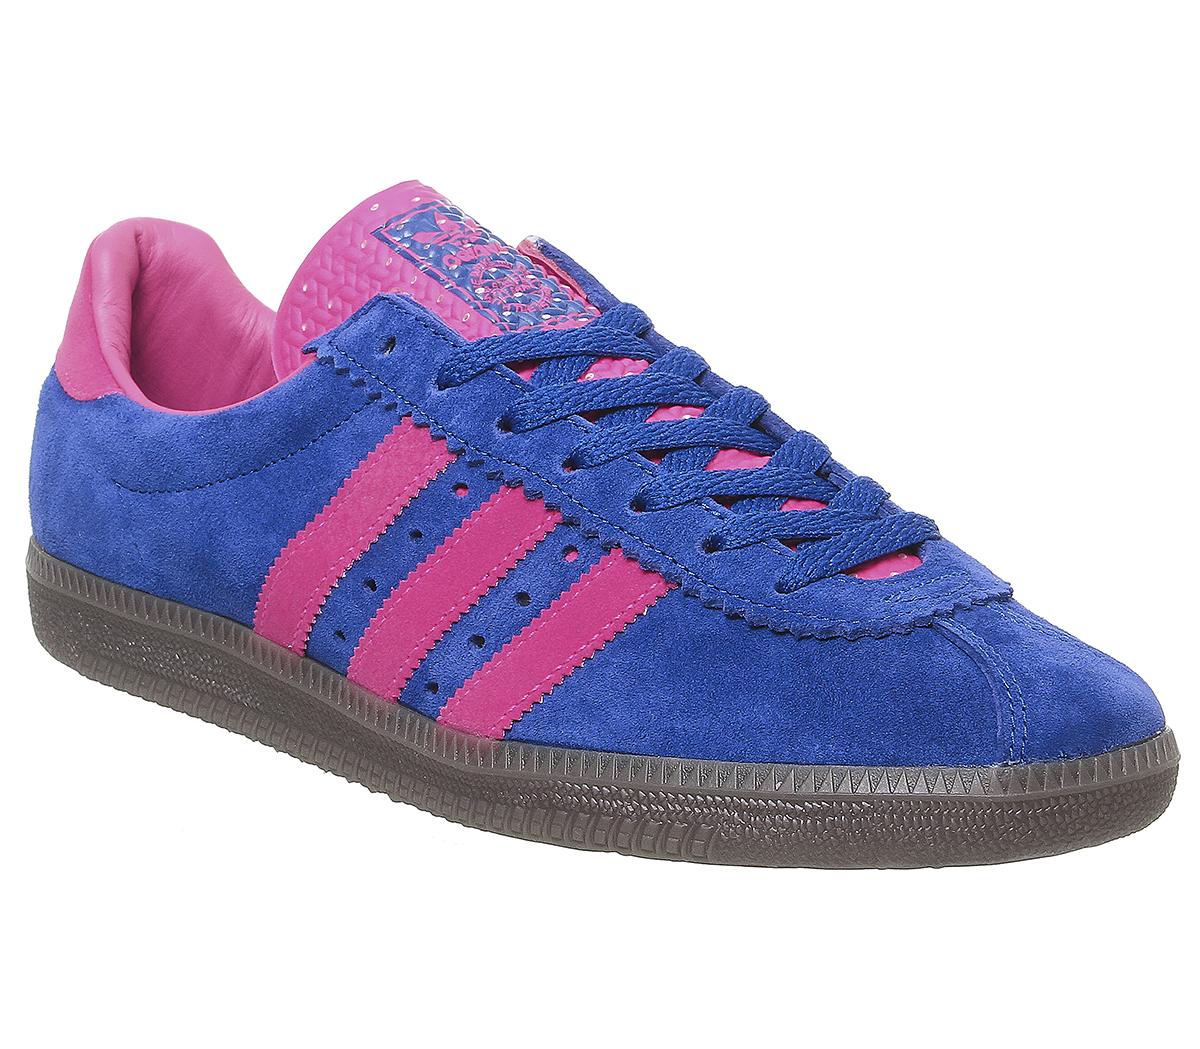 adidas padiham blue and pink